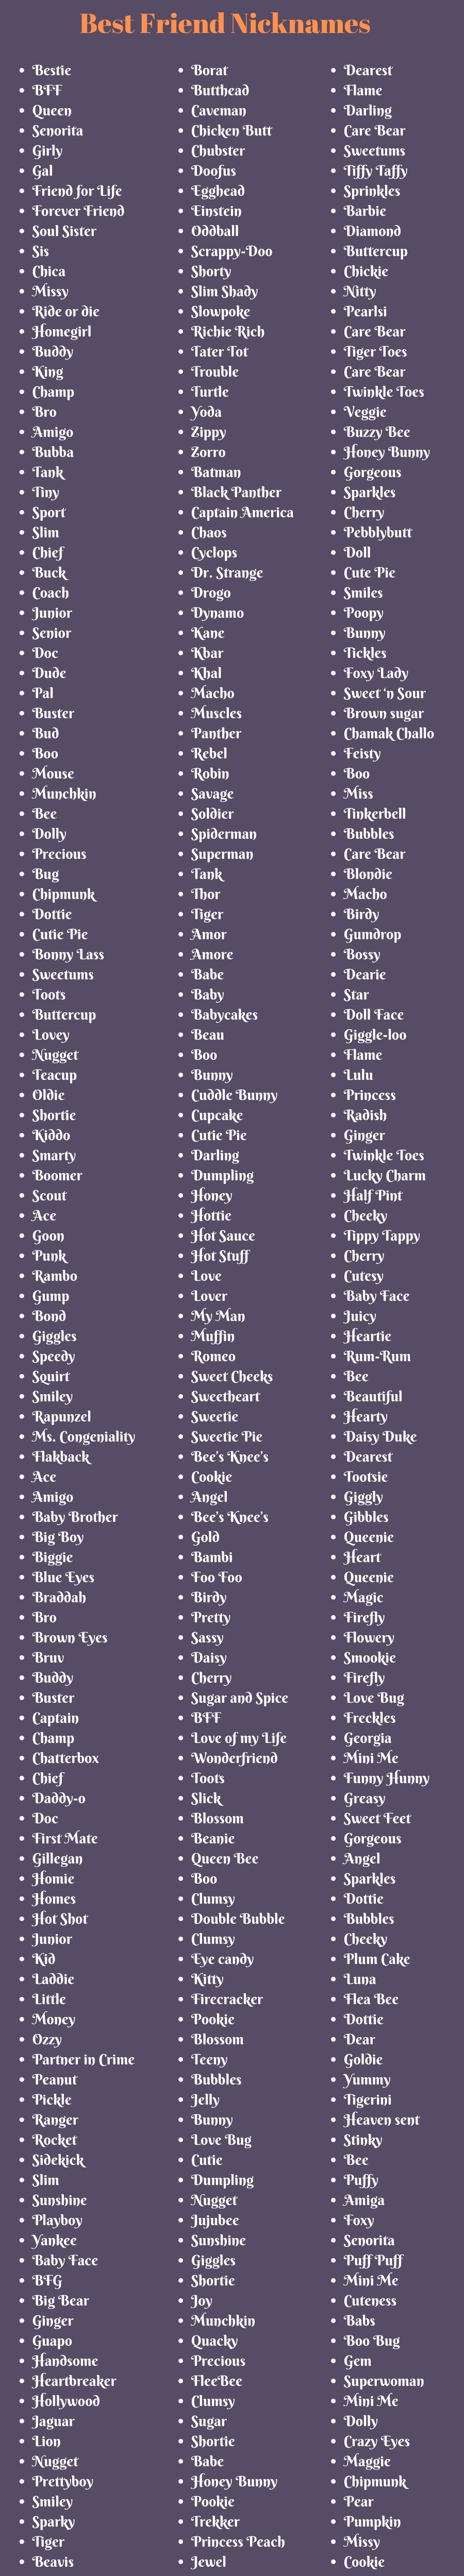 Names to call a cute girl